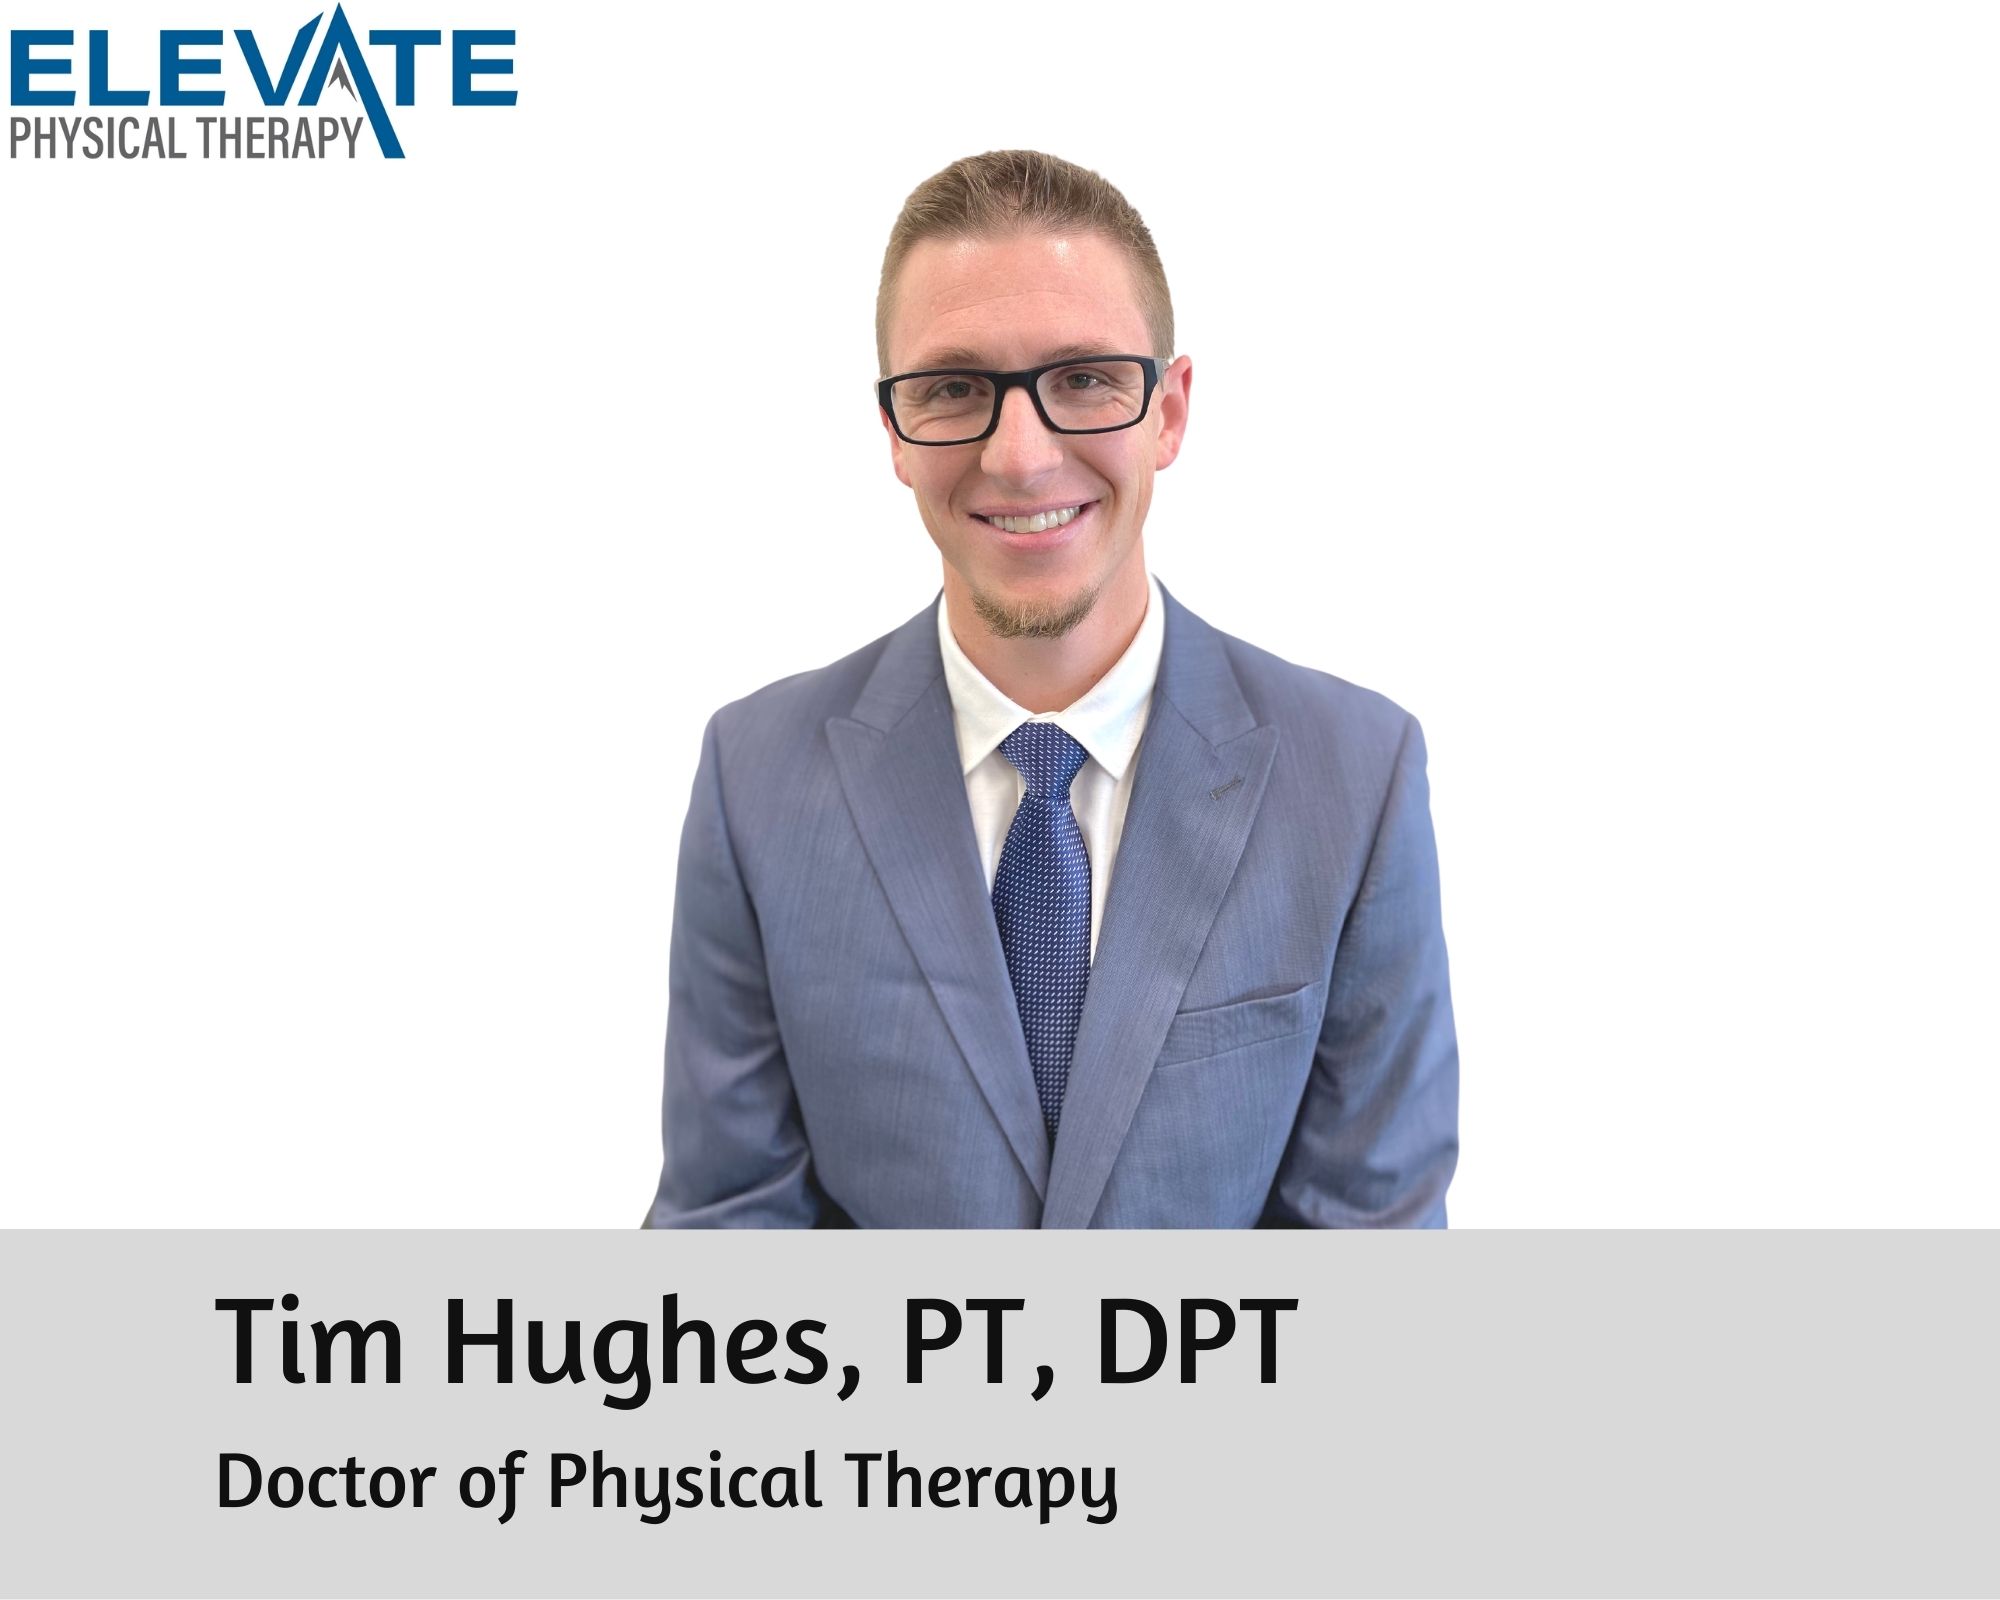 Tim Hughes, PT, DPT